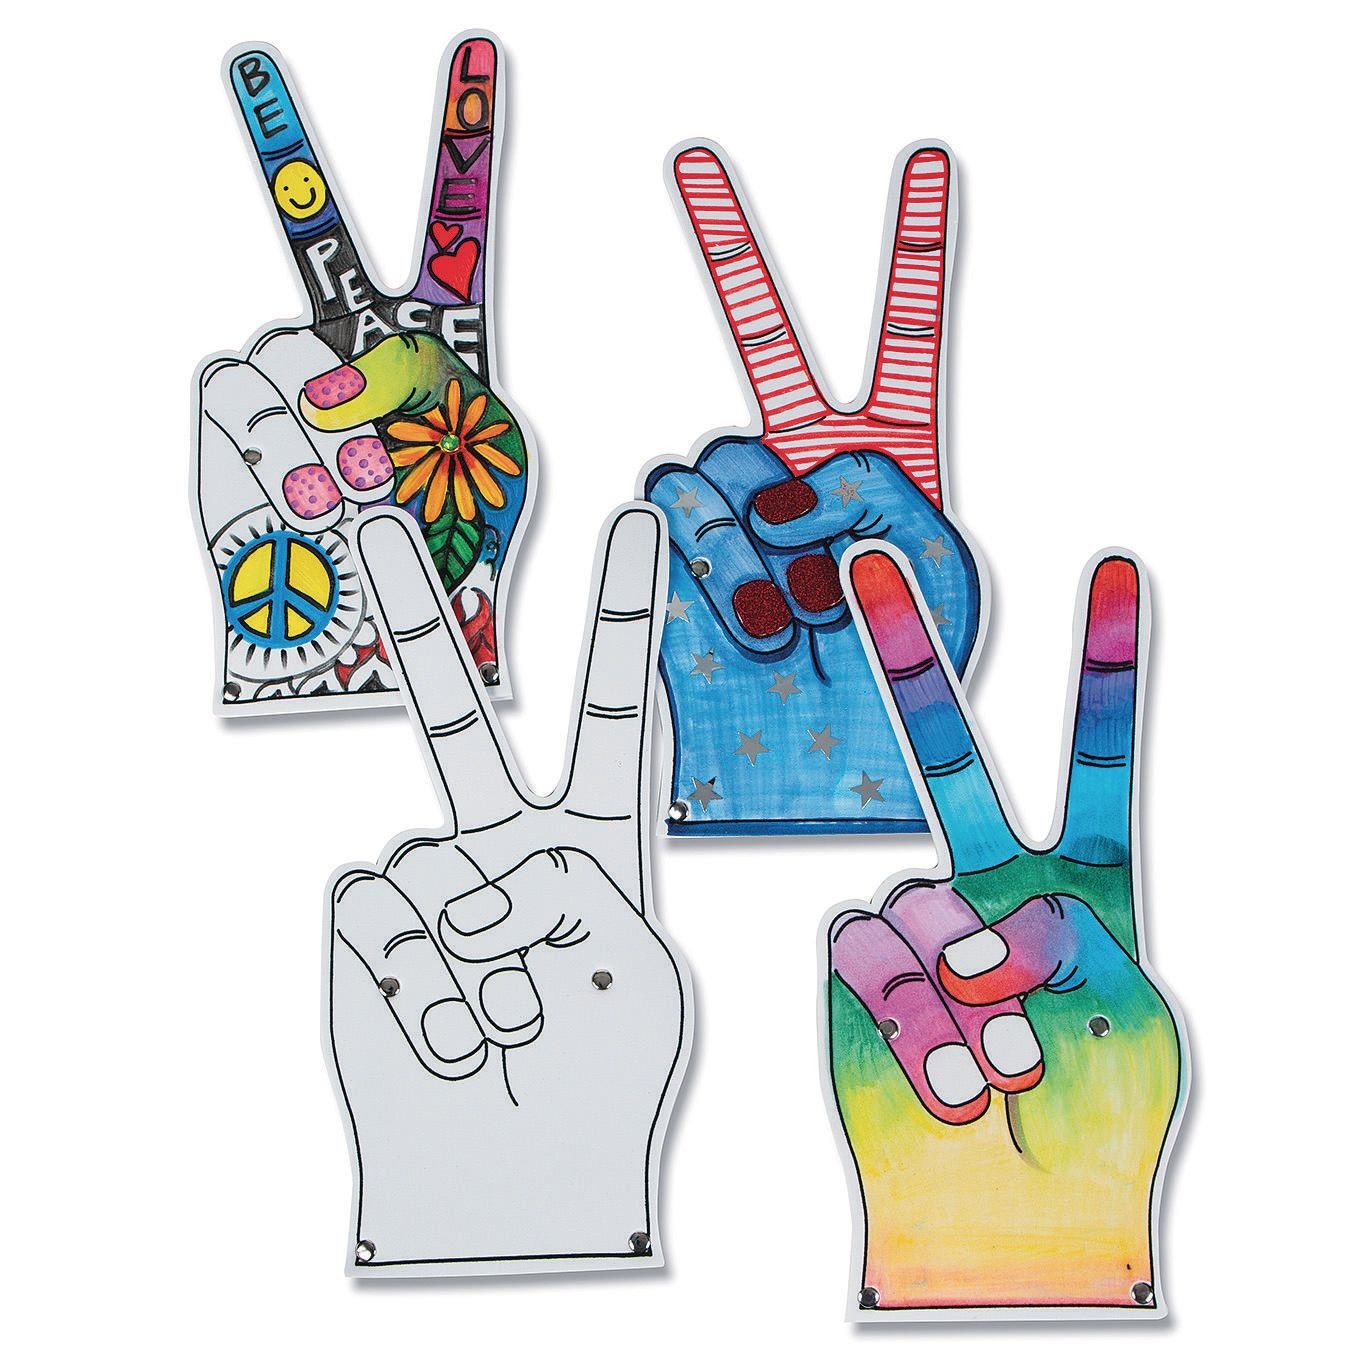 peace hand tumblr